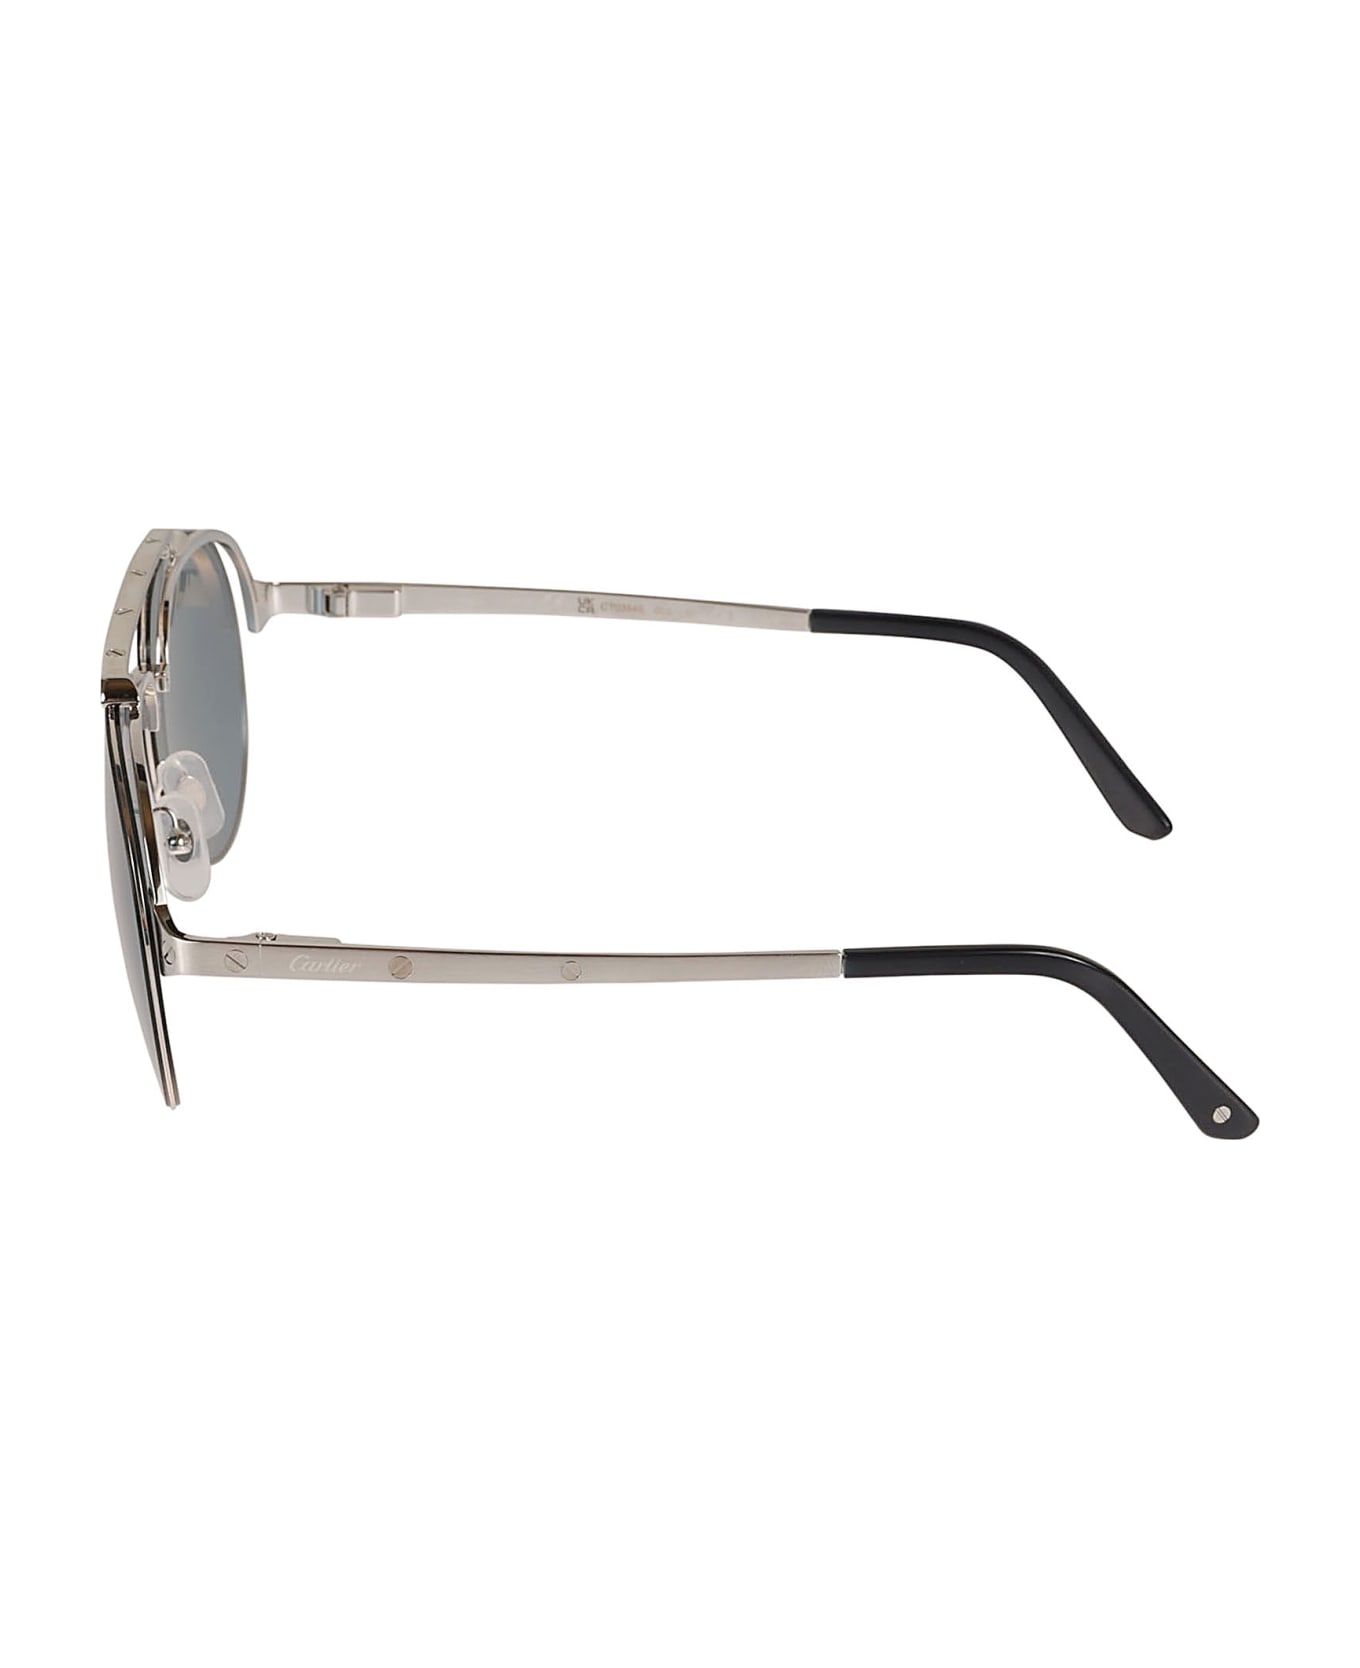 Cartier Eyewear Full Rim Aviator Lens Sunglasses - 003 silver silver blue サングラス